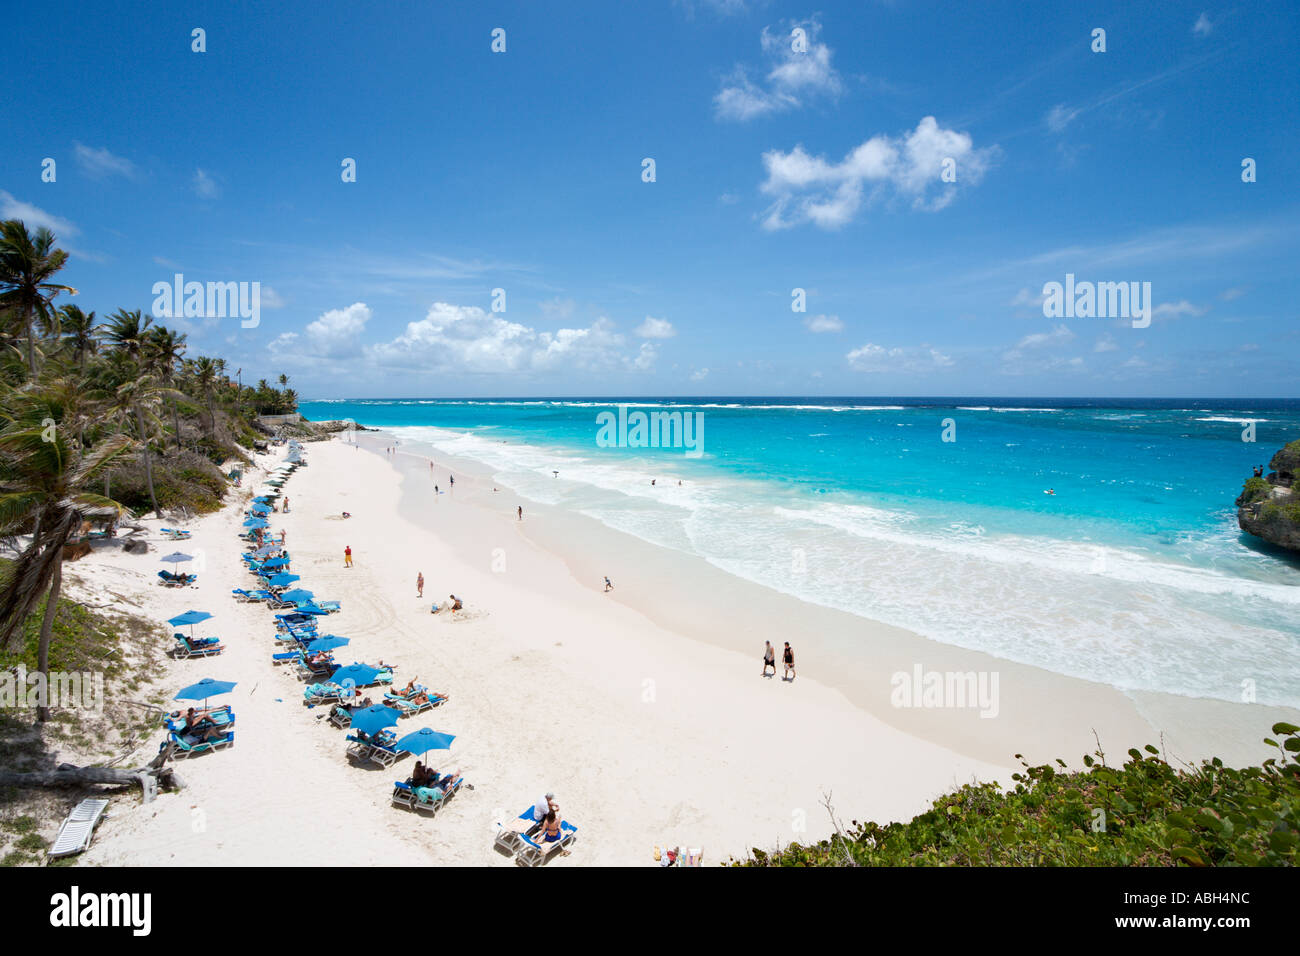 Crane Beach, South East Coast, Barbados, kleine Antillen, Karibik, Caribbean Stockfoto